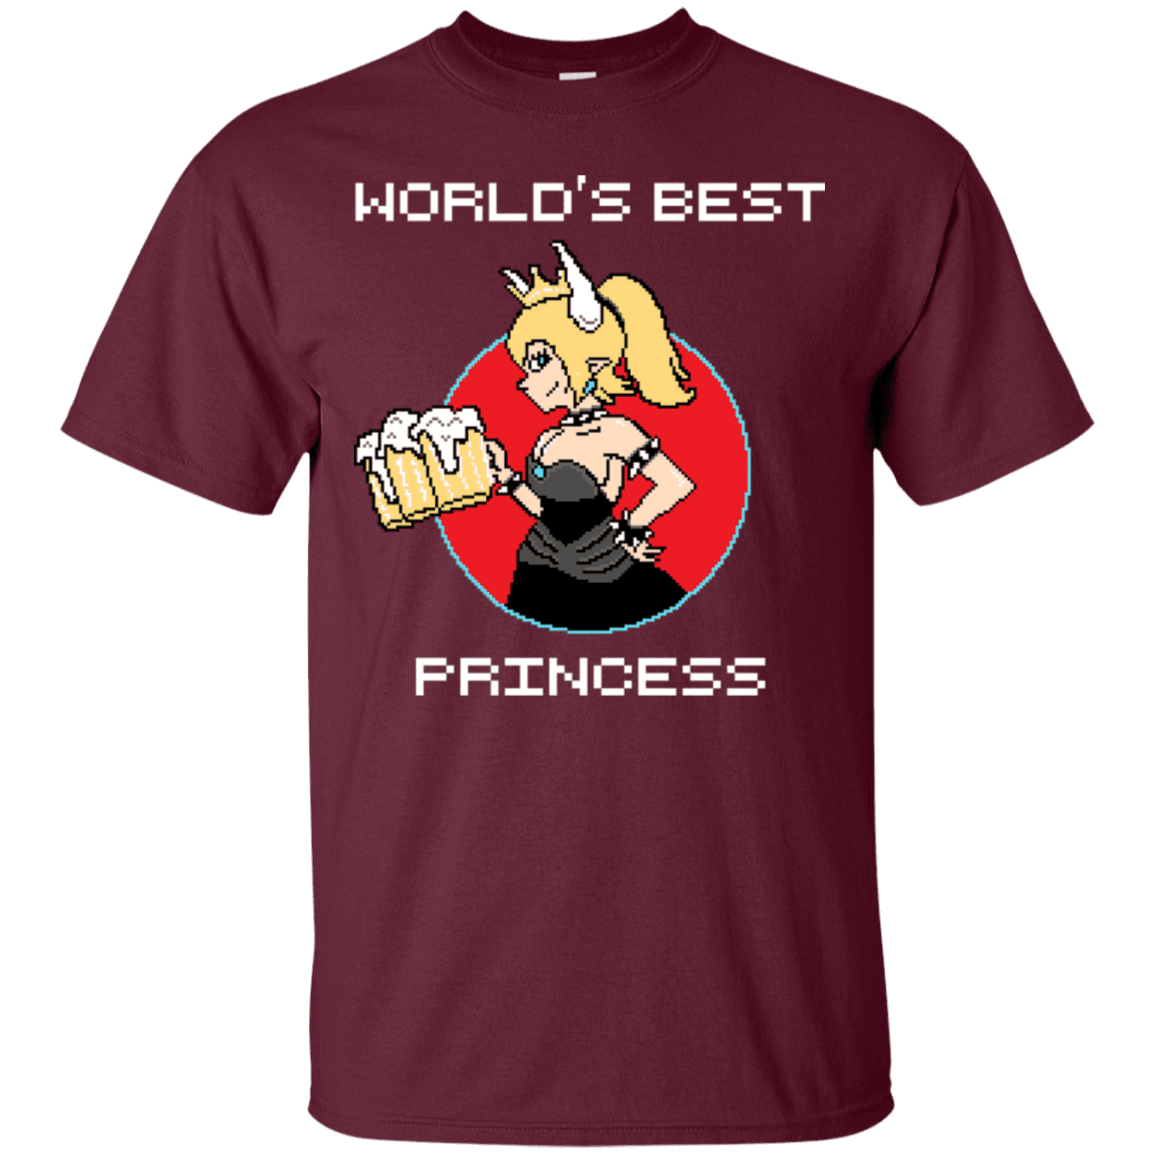 T-Shirts Maroon / S World's Best Princess T-Shirt